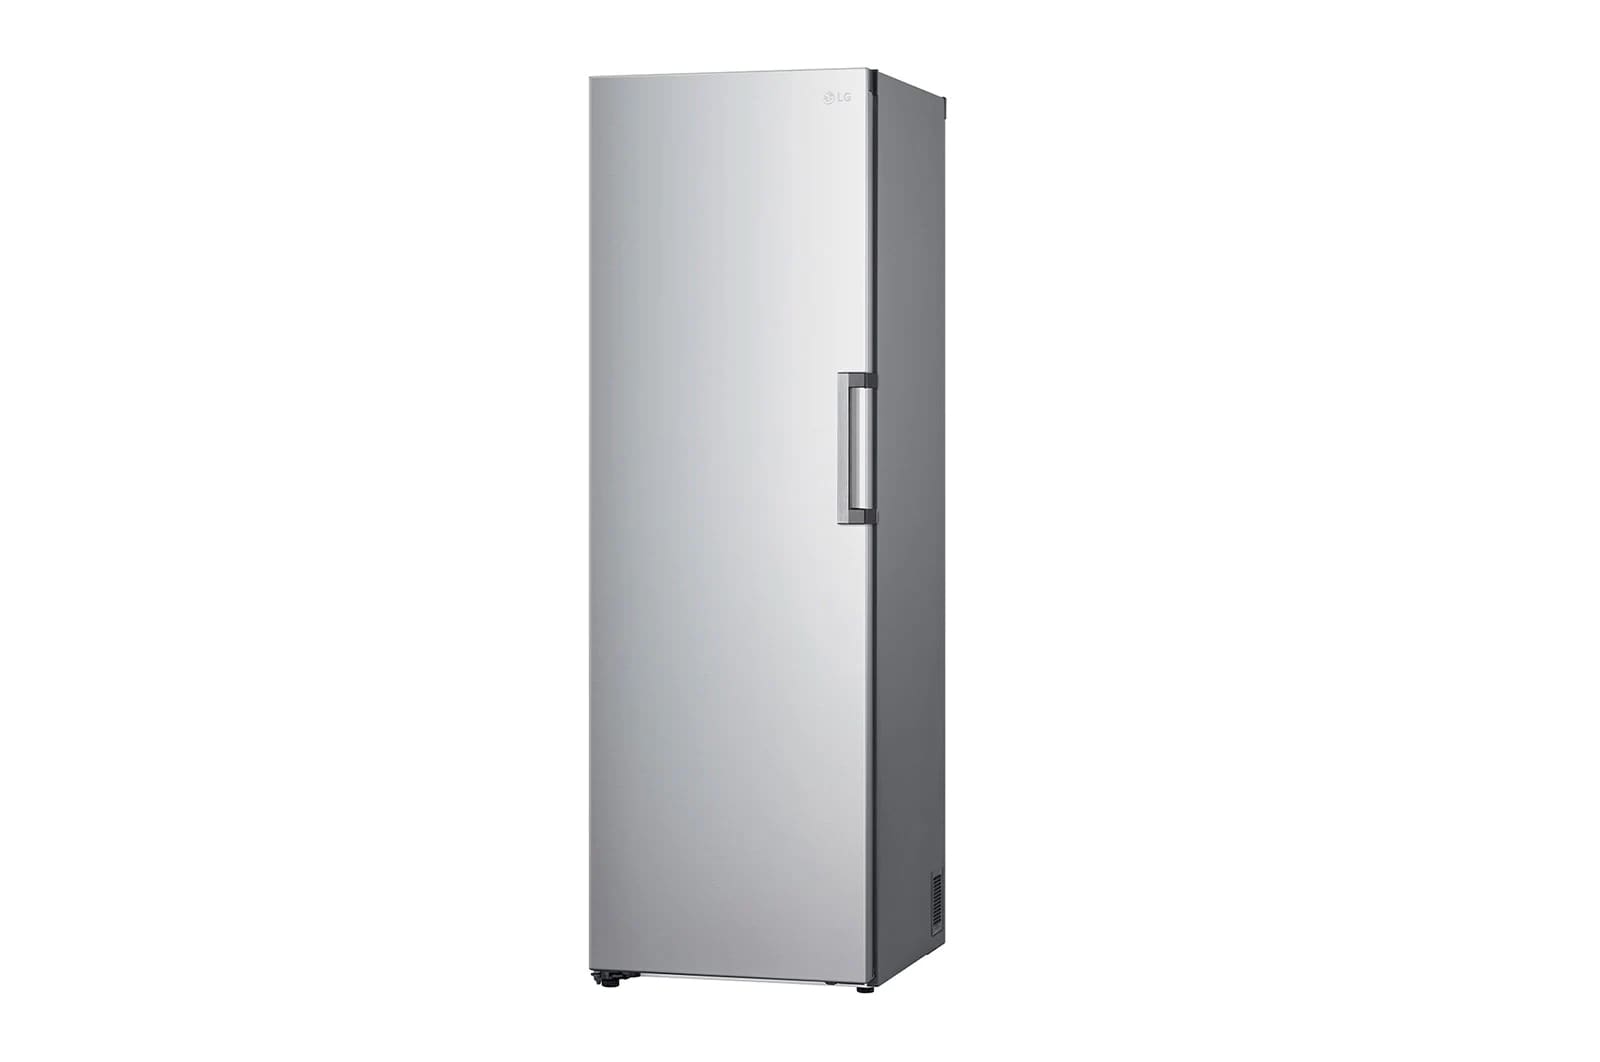 LG - 11.4 cu. Ft  Upright Freezer in Silver - LROFC1104V